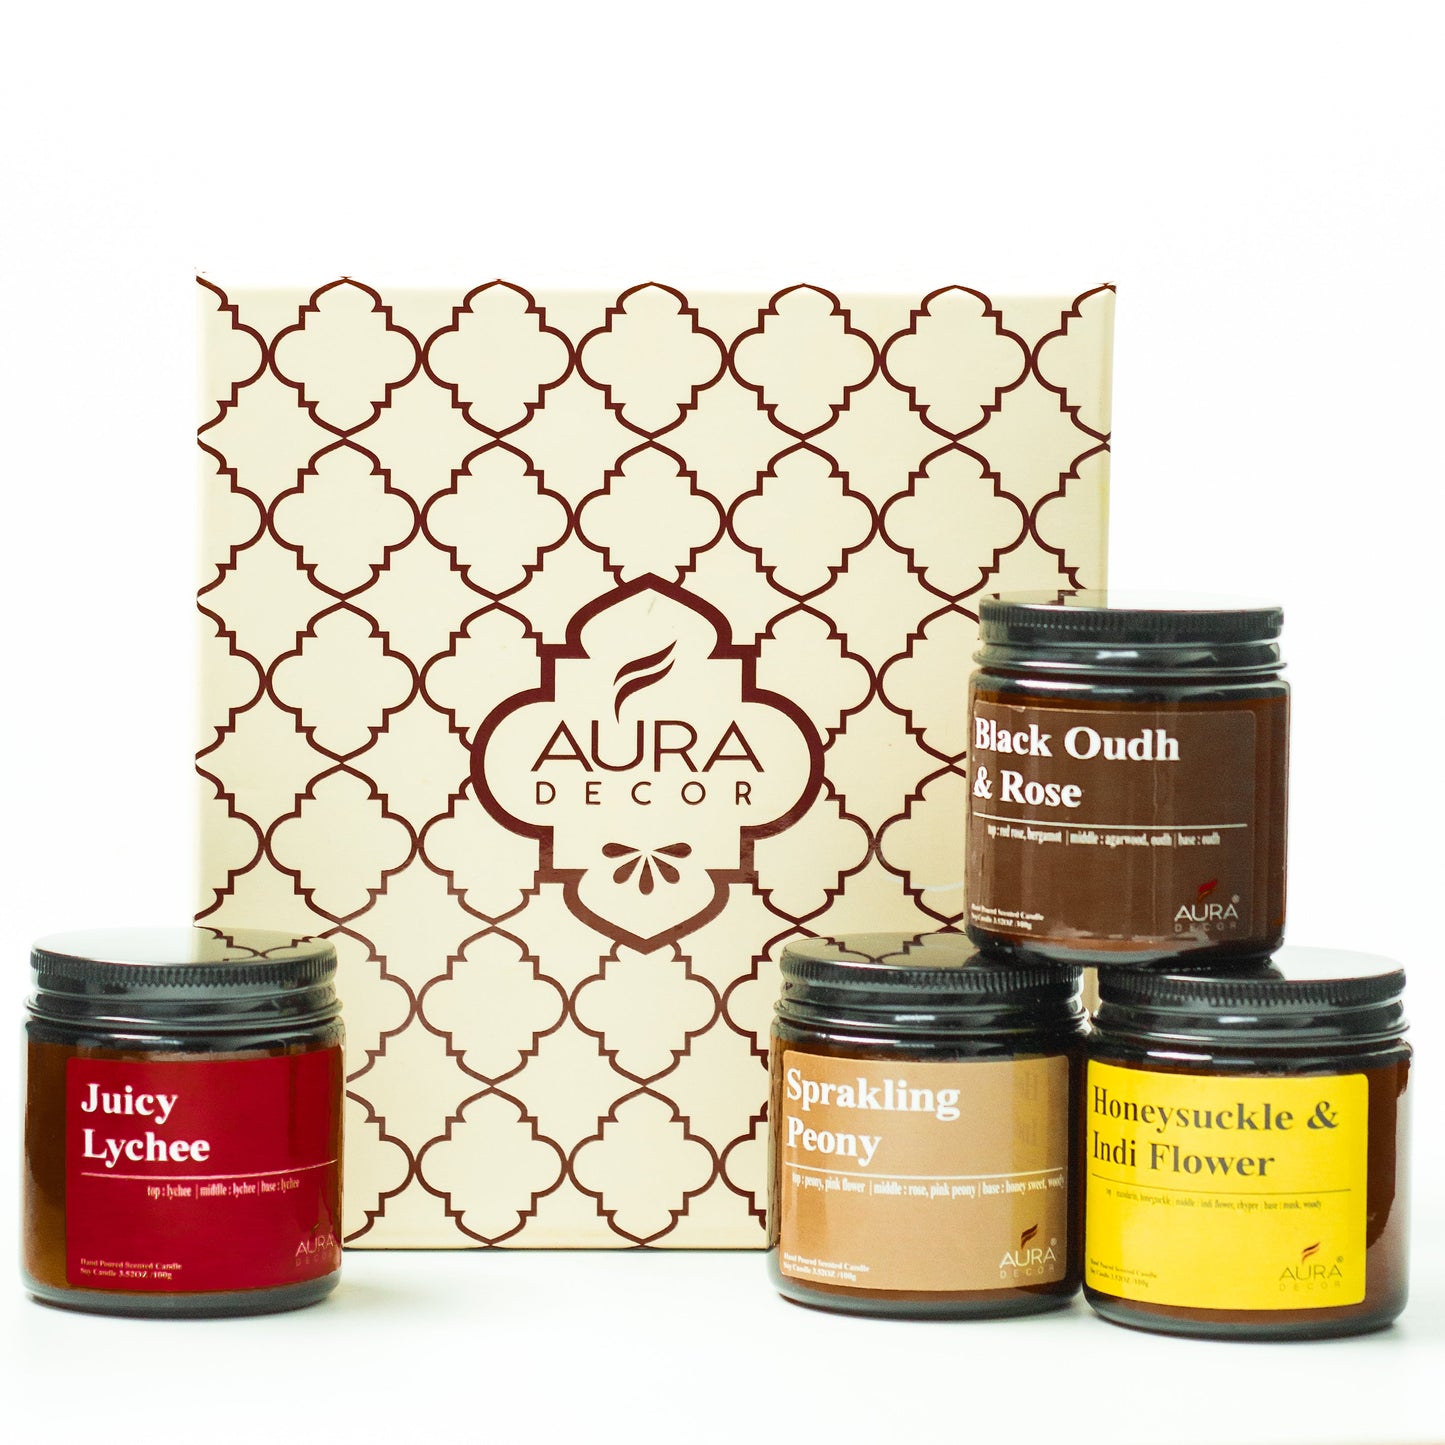 AuraDecor Amber Jar Set 4 in 2 Variants in a Gift Box